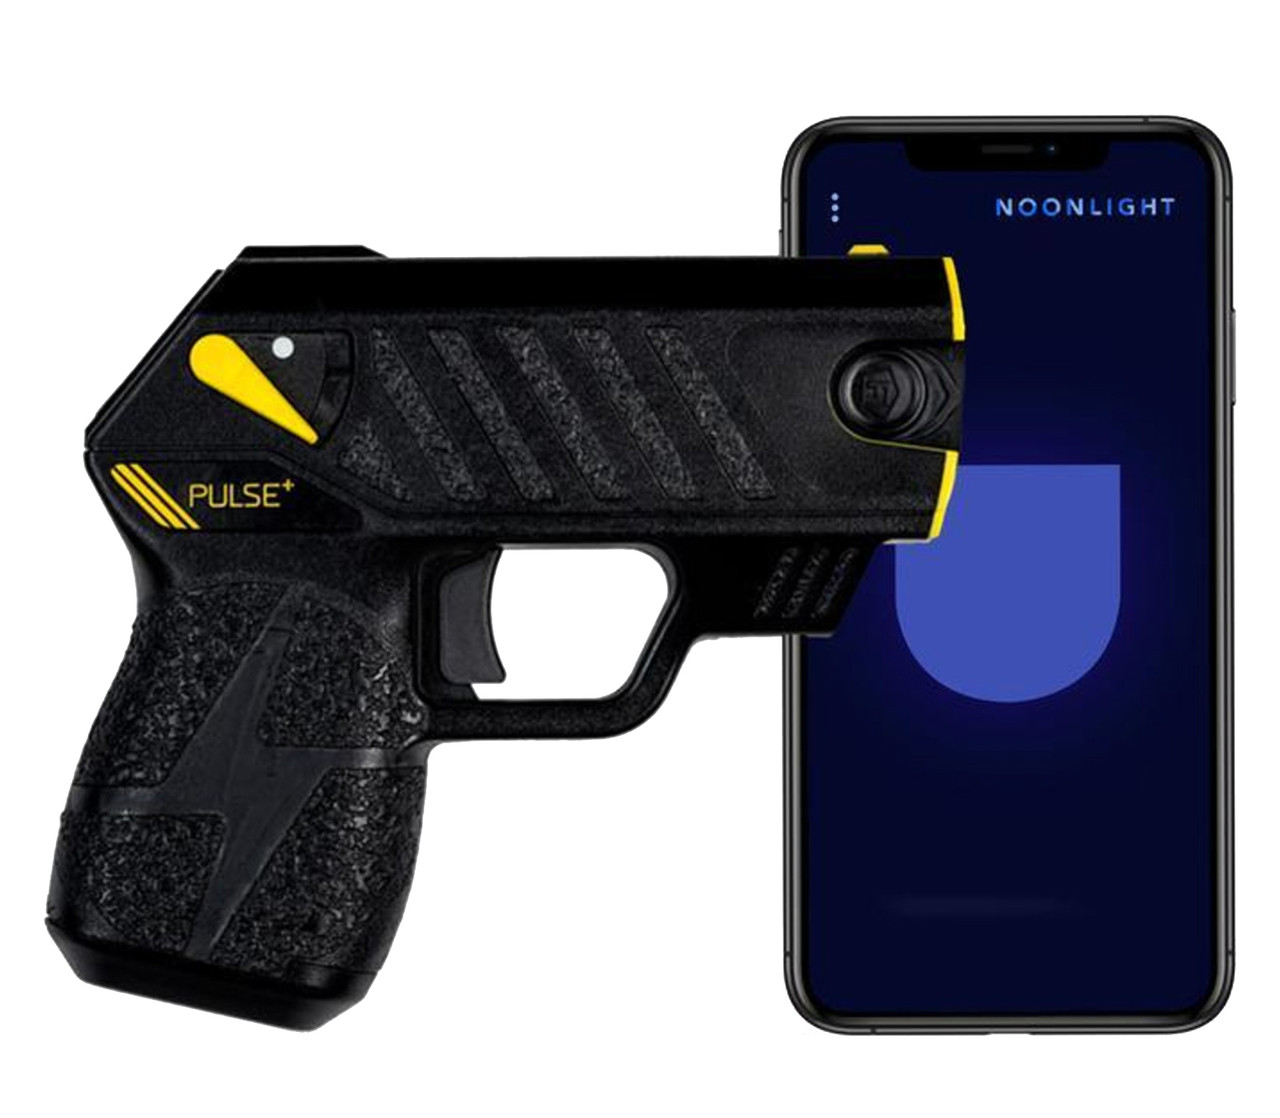 Taser Pulse + Self-Defense Tool with Noonlight Mobile Integration, Black -  Bereli Inc.